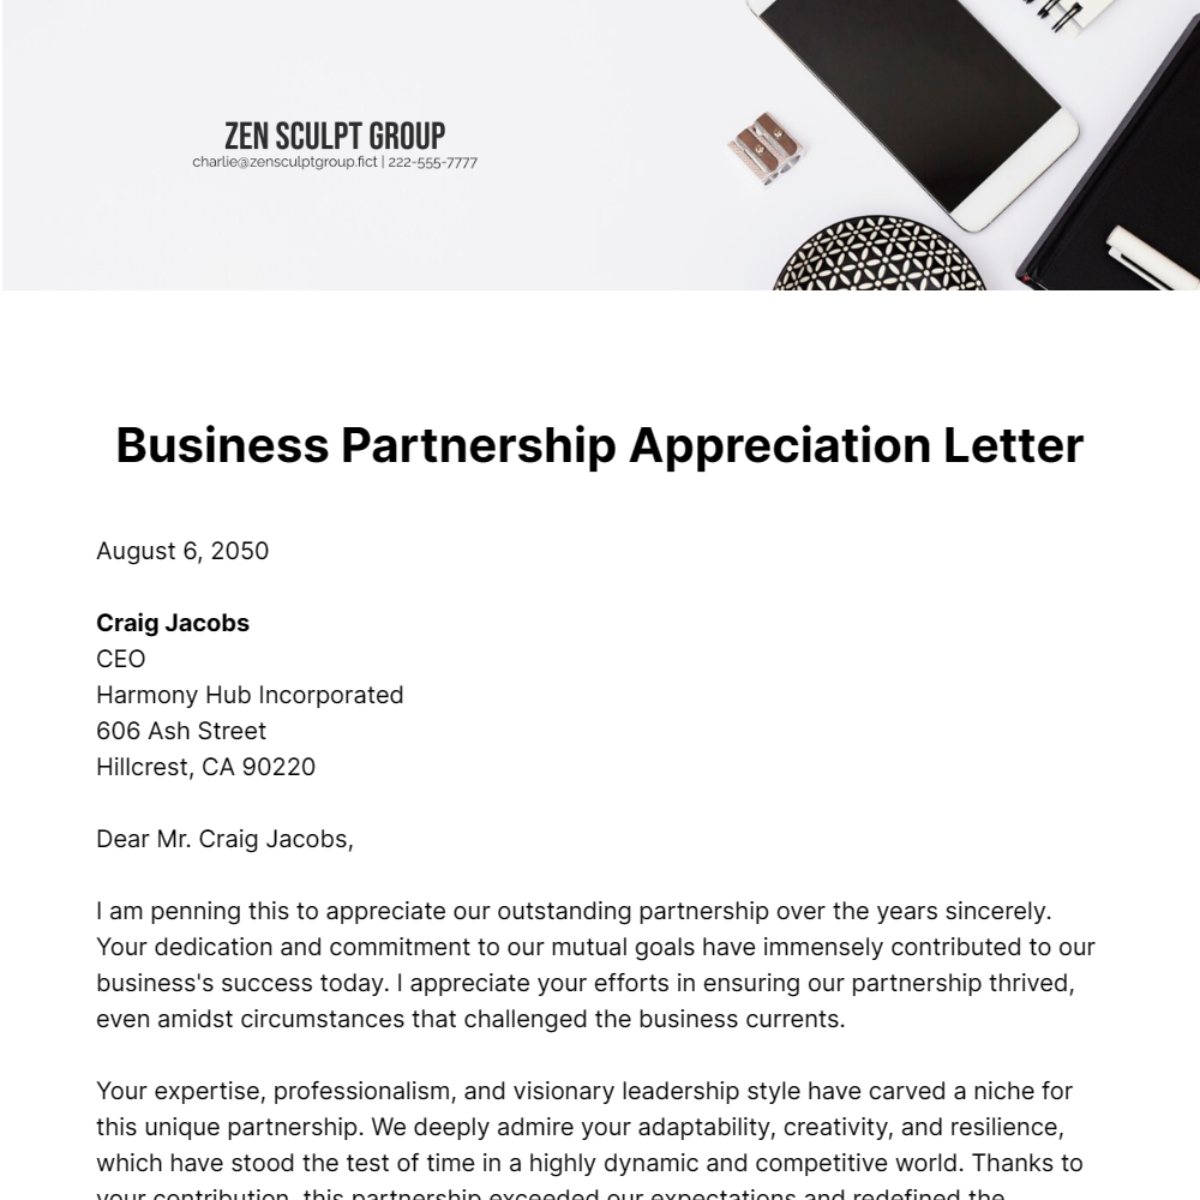 Free Business Partnership Appreciation Letter Template